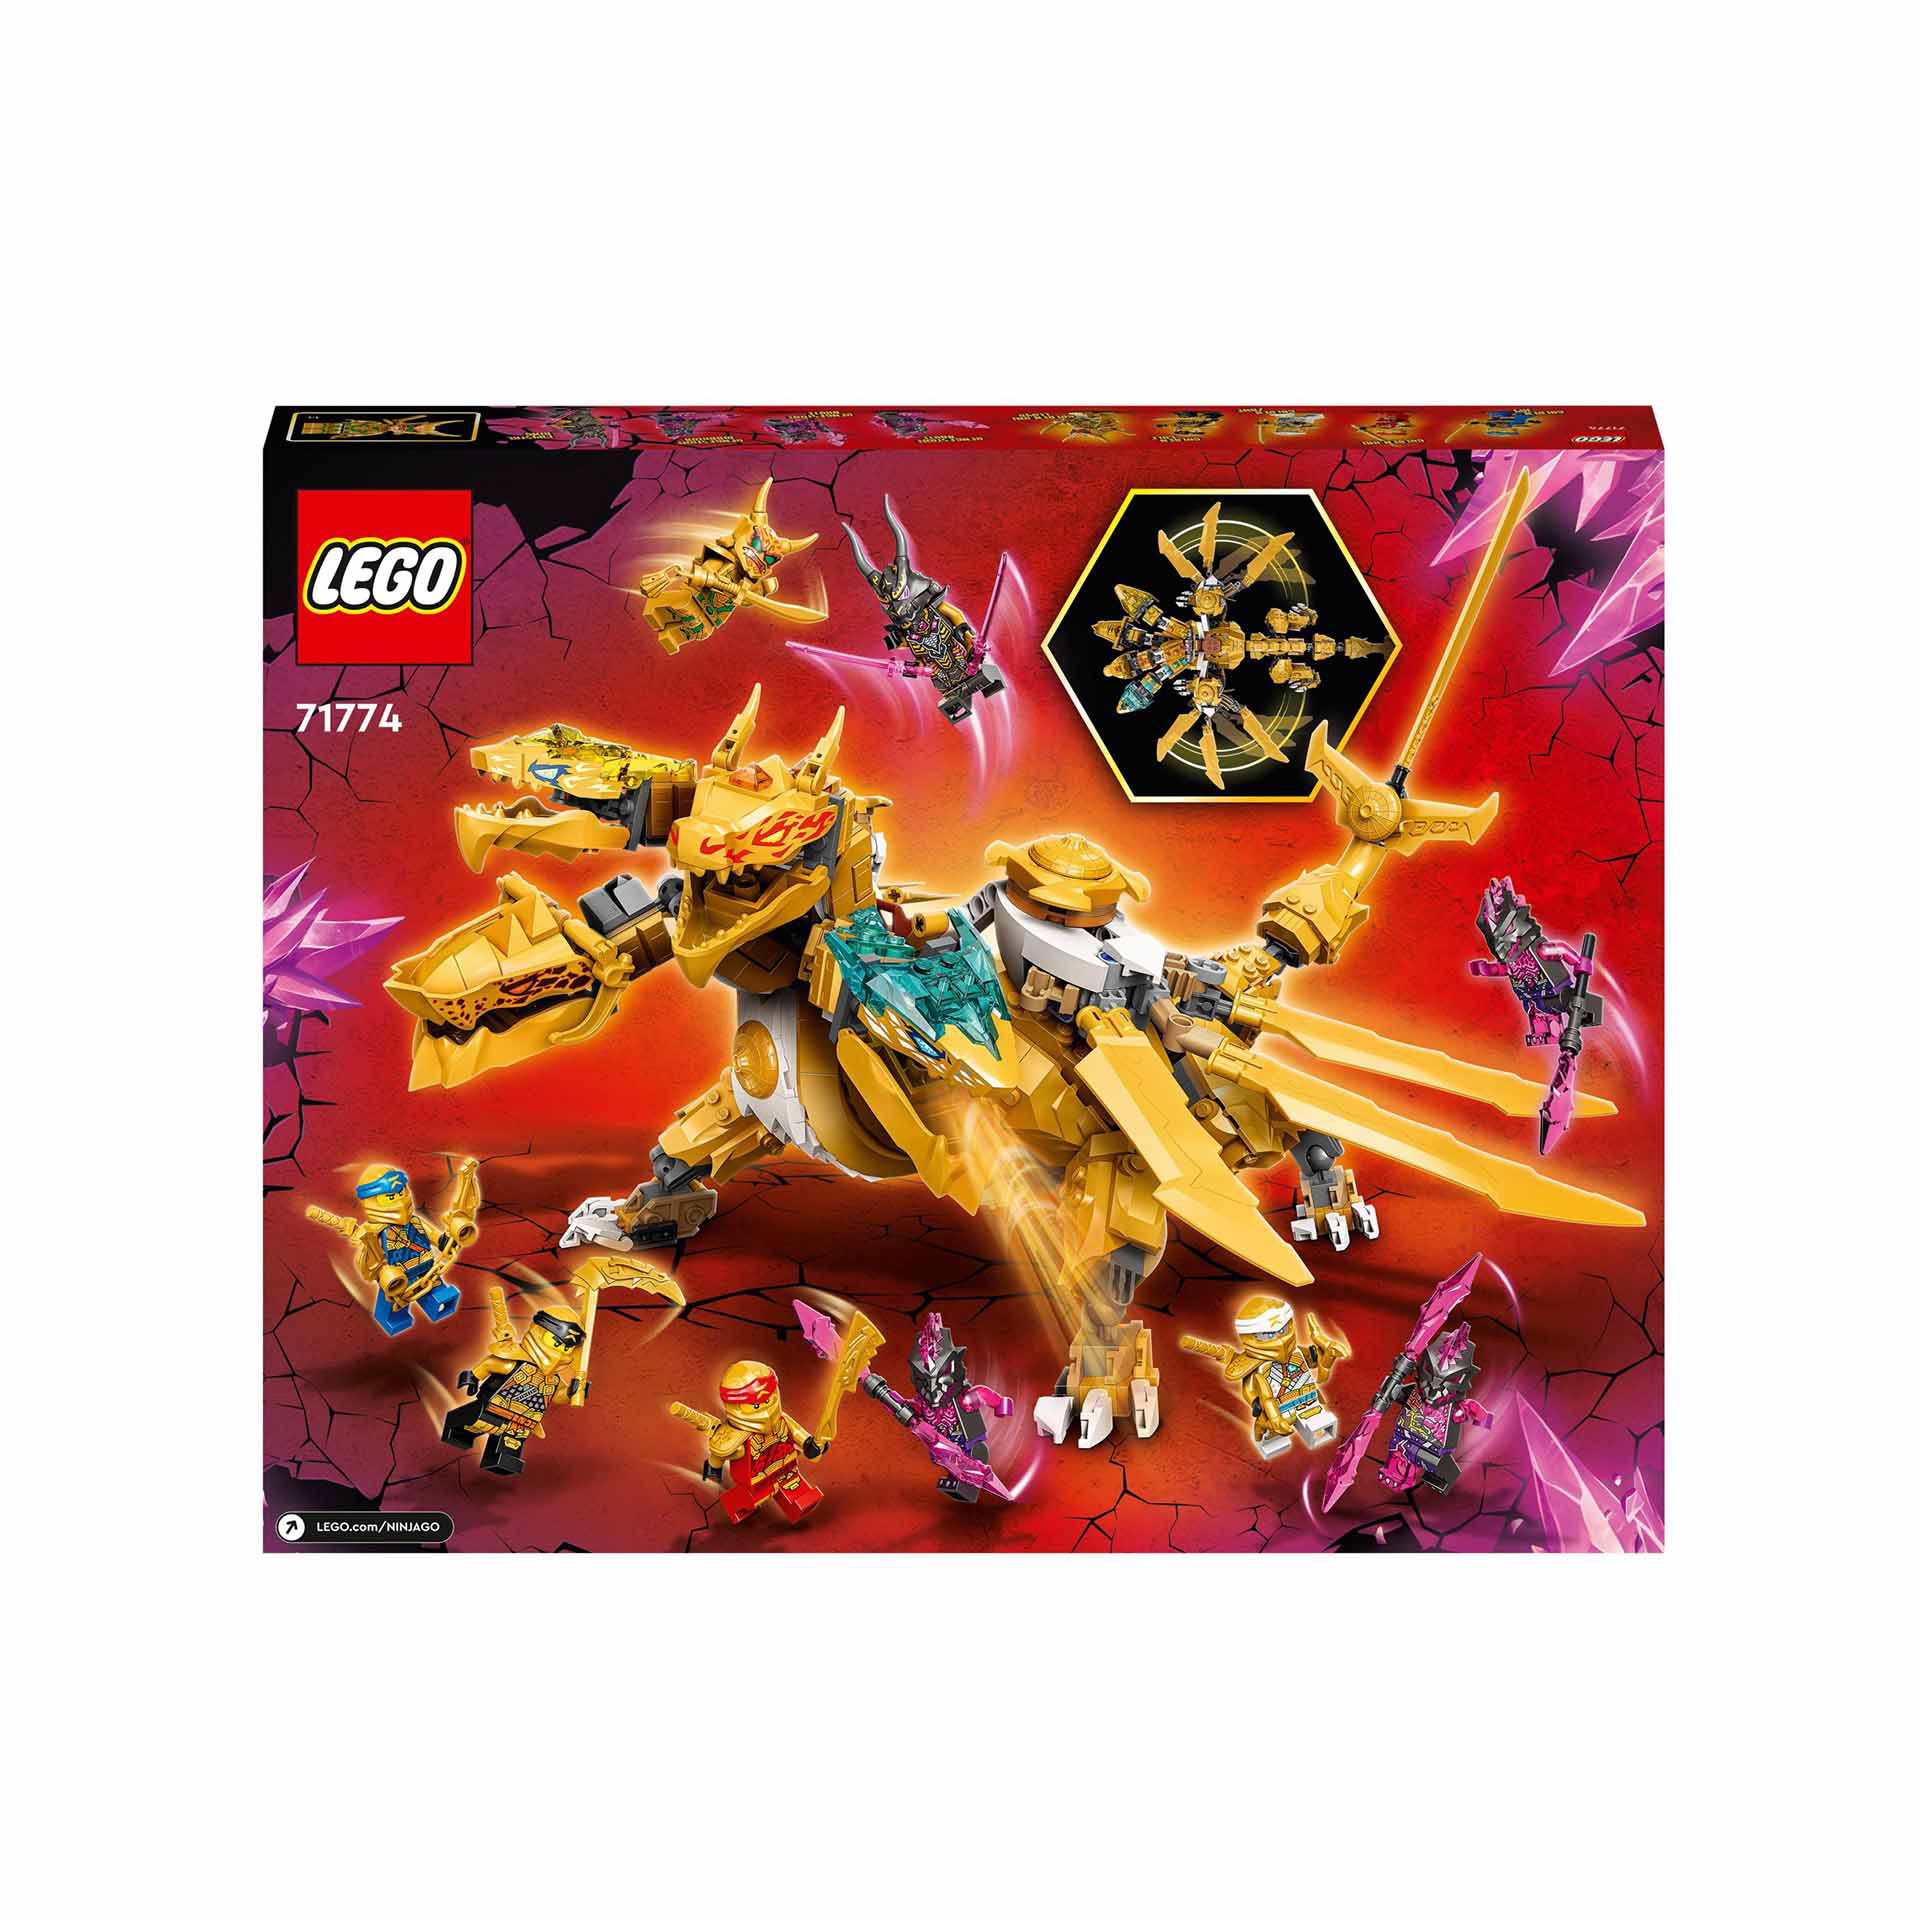 LEGO Ninjago Ultra Drago d'Oro di Lloyd, Set Serie TV Crystallized con 9 Minifi 71774, , large